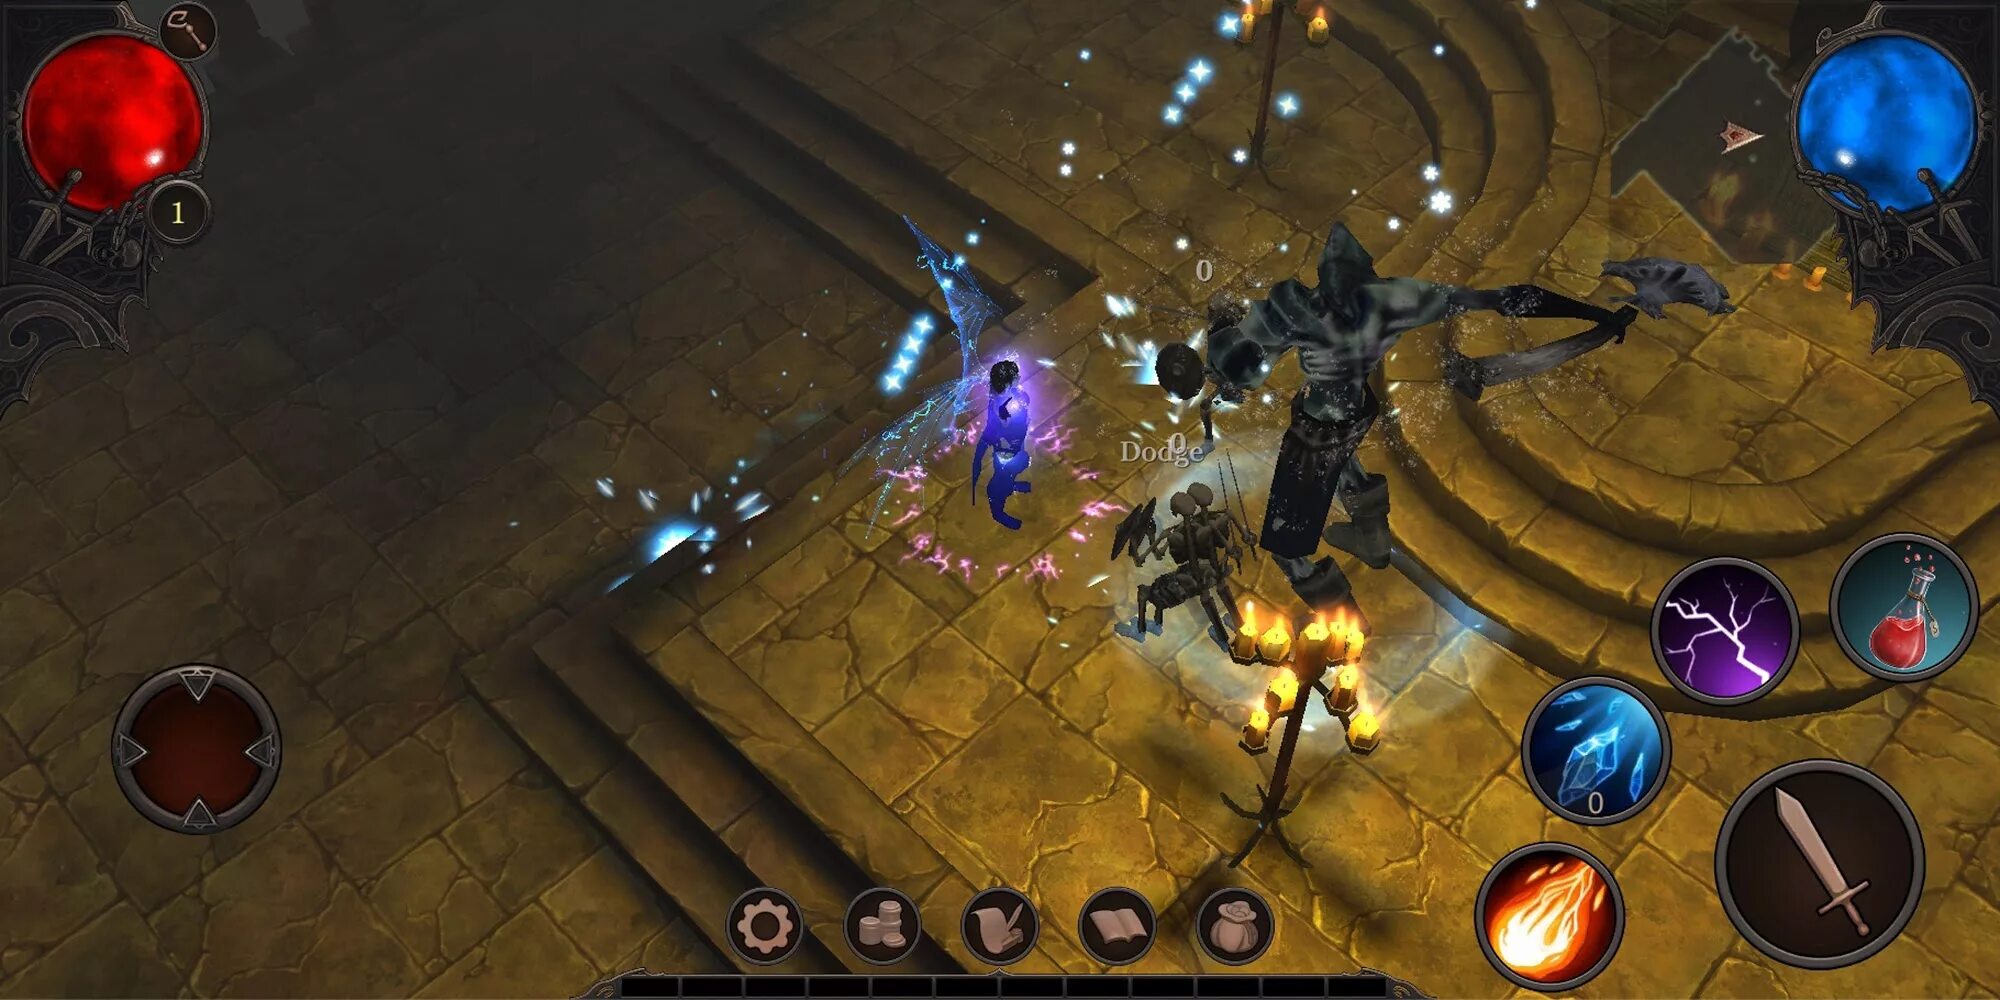 РПГ типа диабло 3. Diablo 3 Android. Vengeance игра на андроид. Диабло мультиплеер. Рпг на телефон андроид